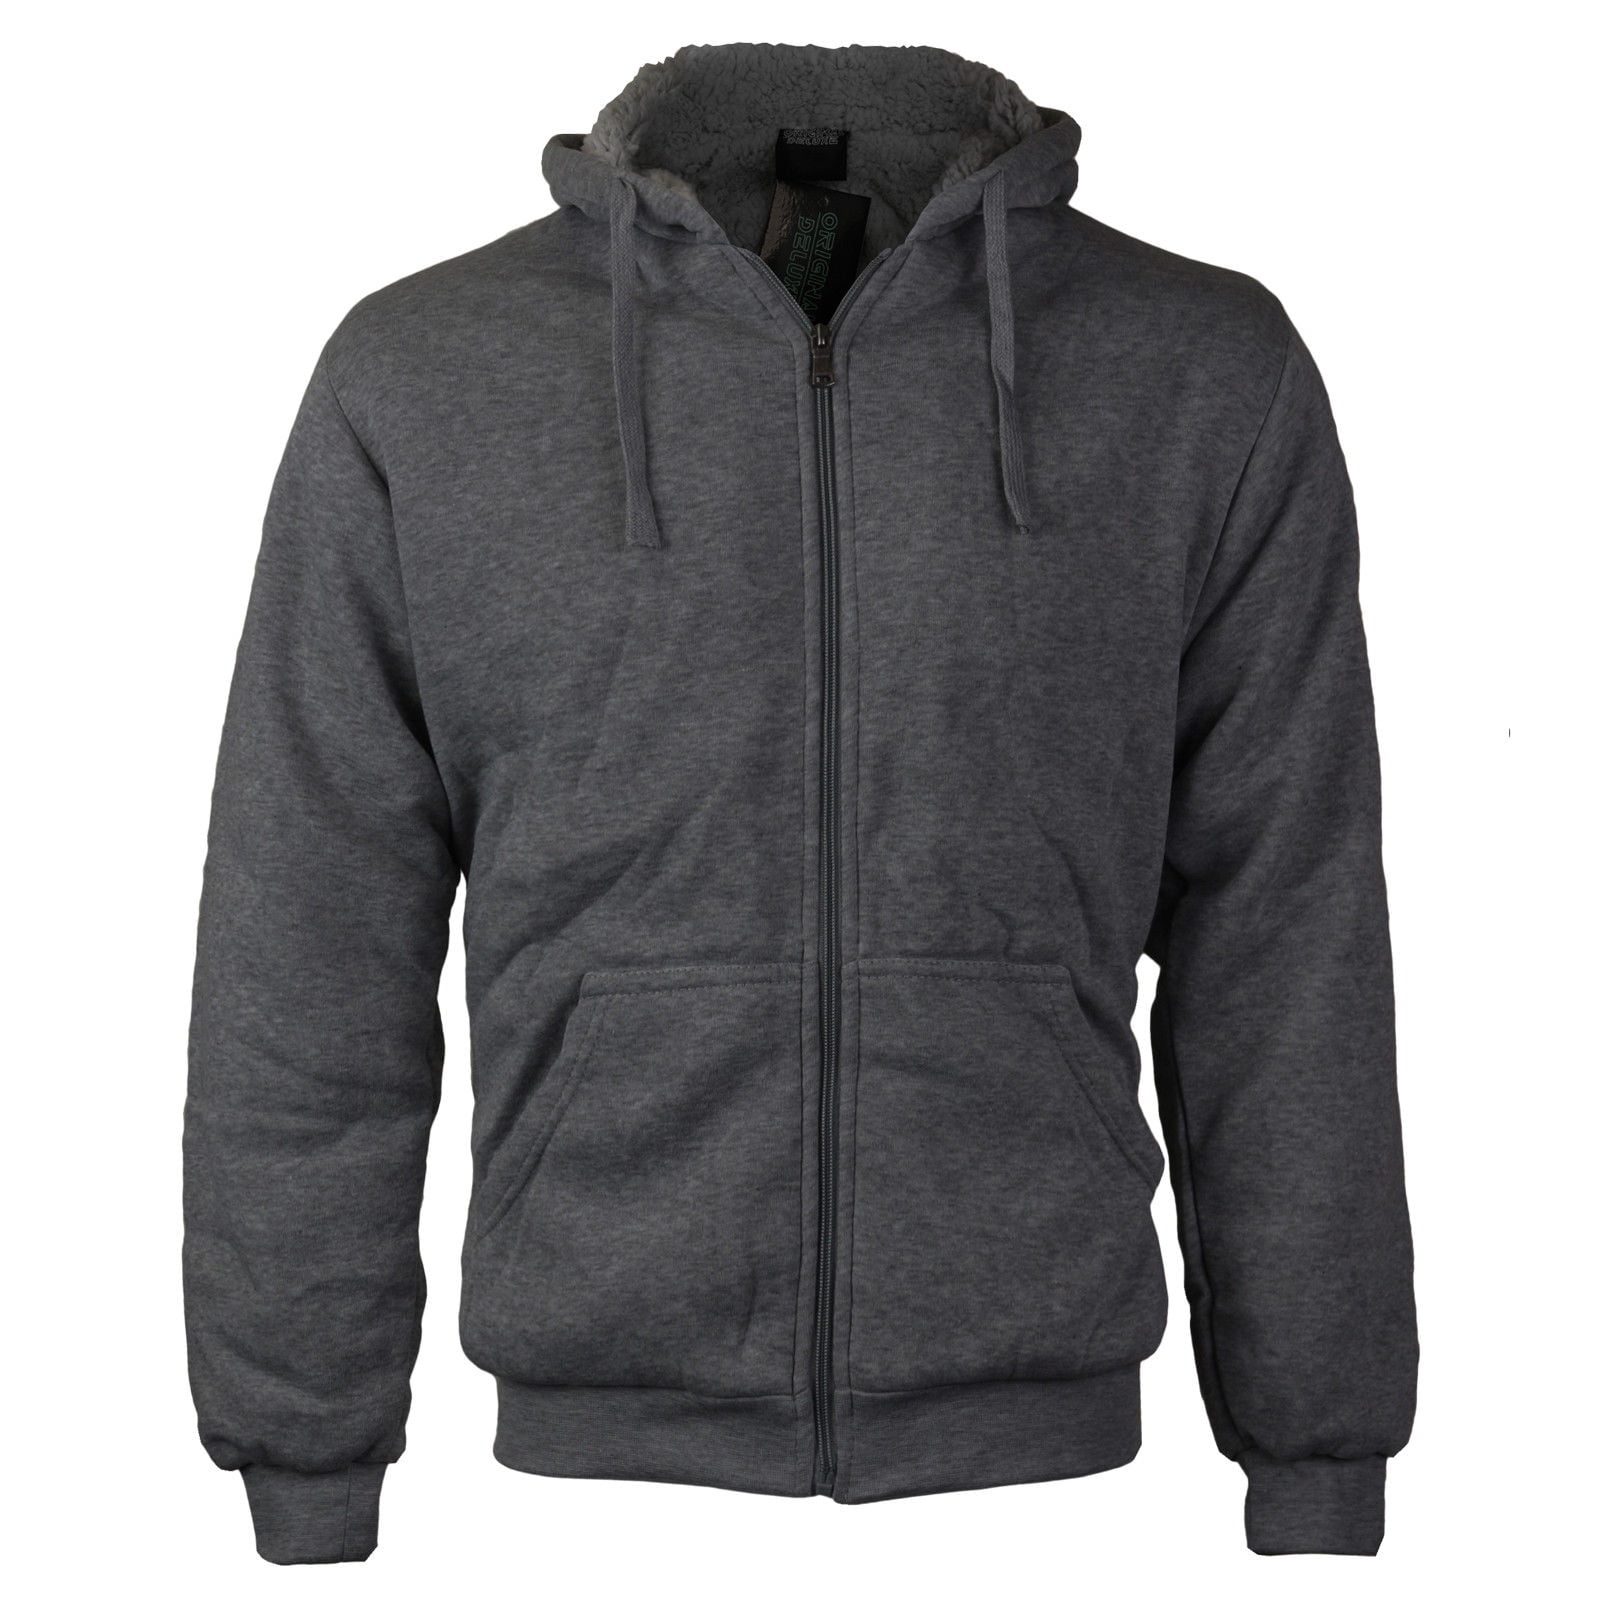 Men's Premium Athletic Soft Sherpa Lined Fleece Zip Up Hoodie Sweater  Jacket (Dark Grey,XL)